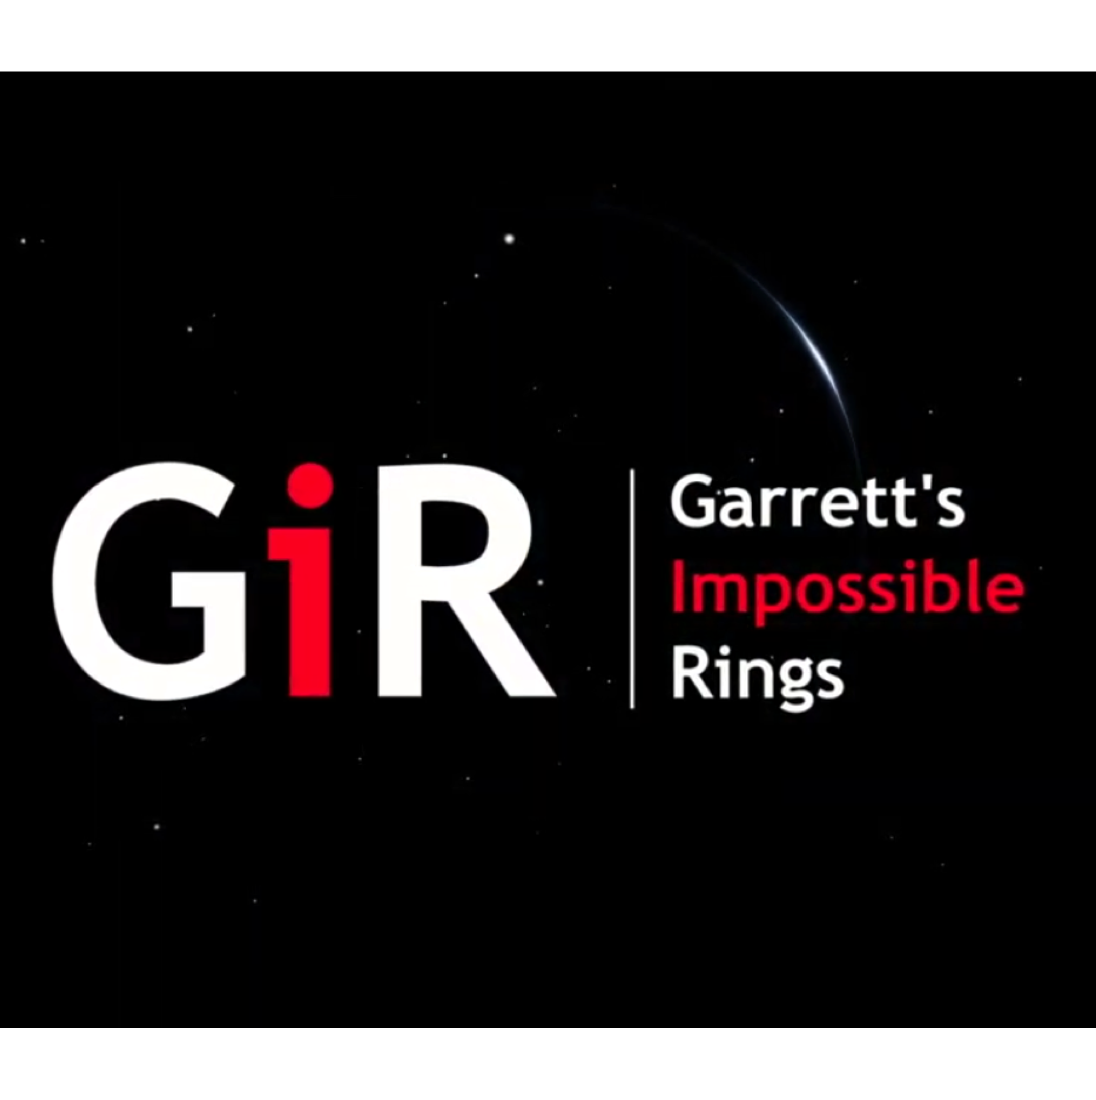 Garrett's Impossible Rings (GIR) by Matthew Garrett